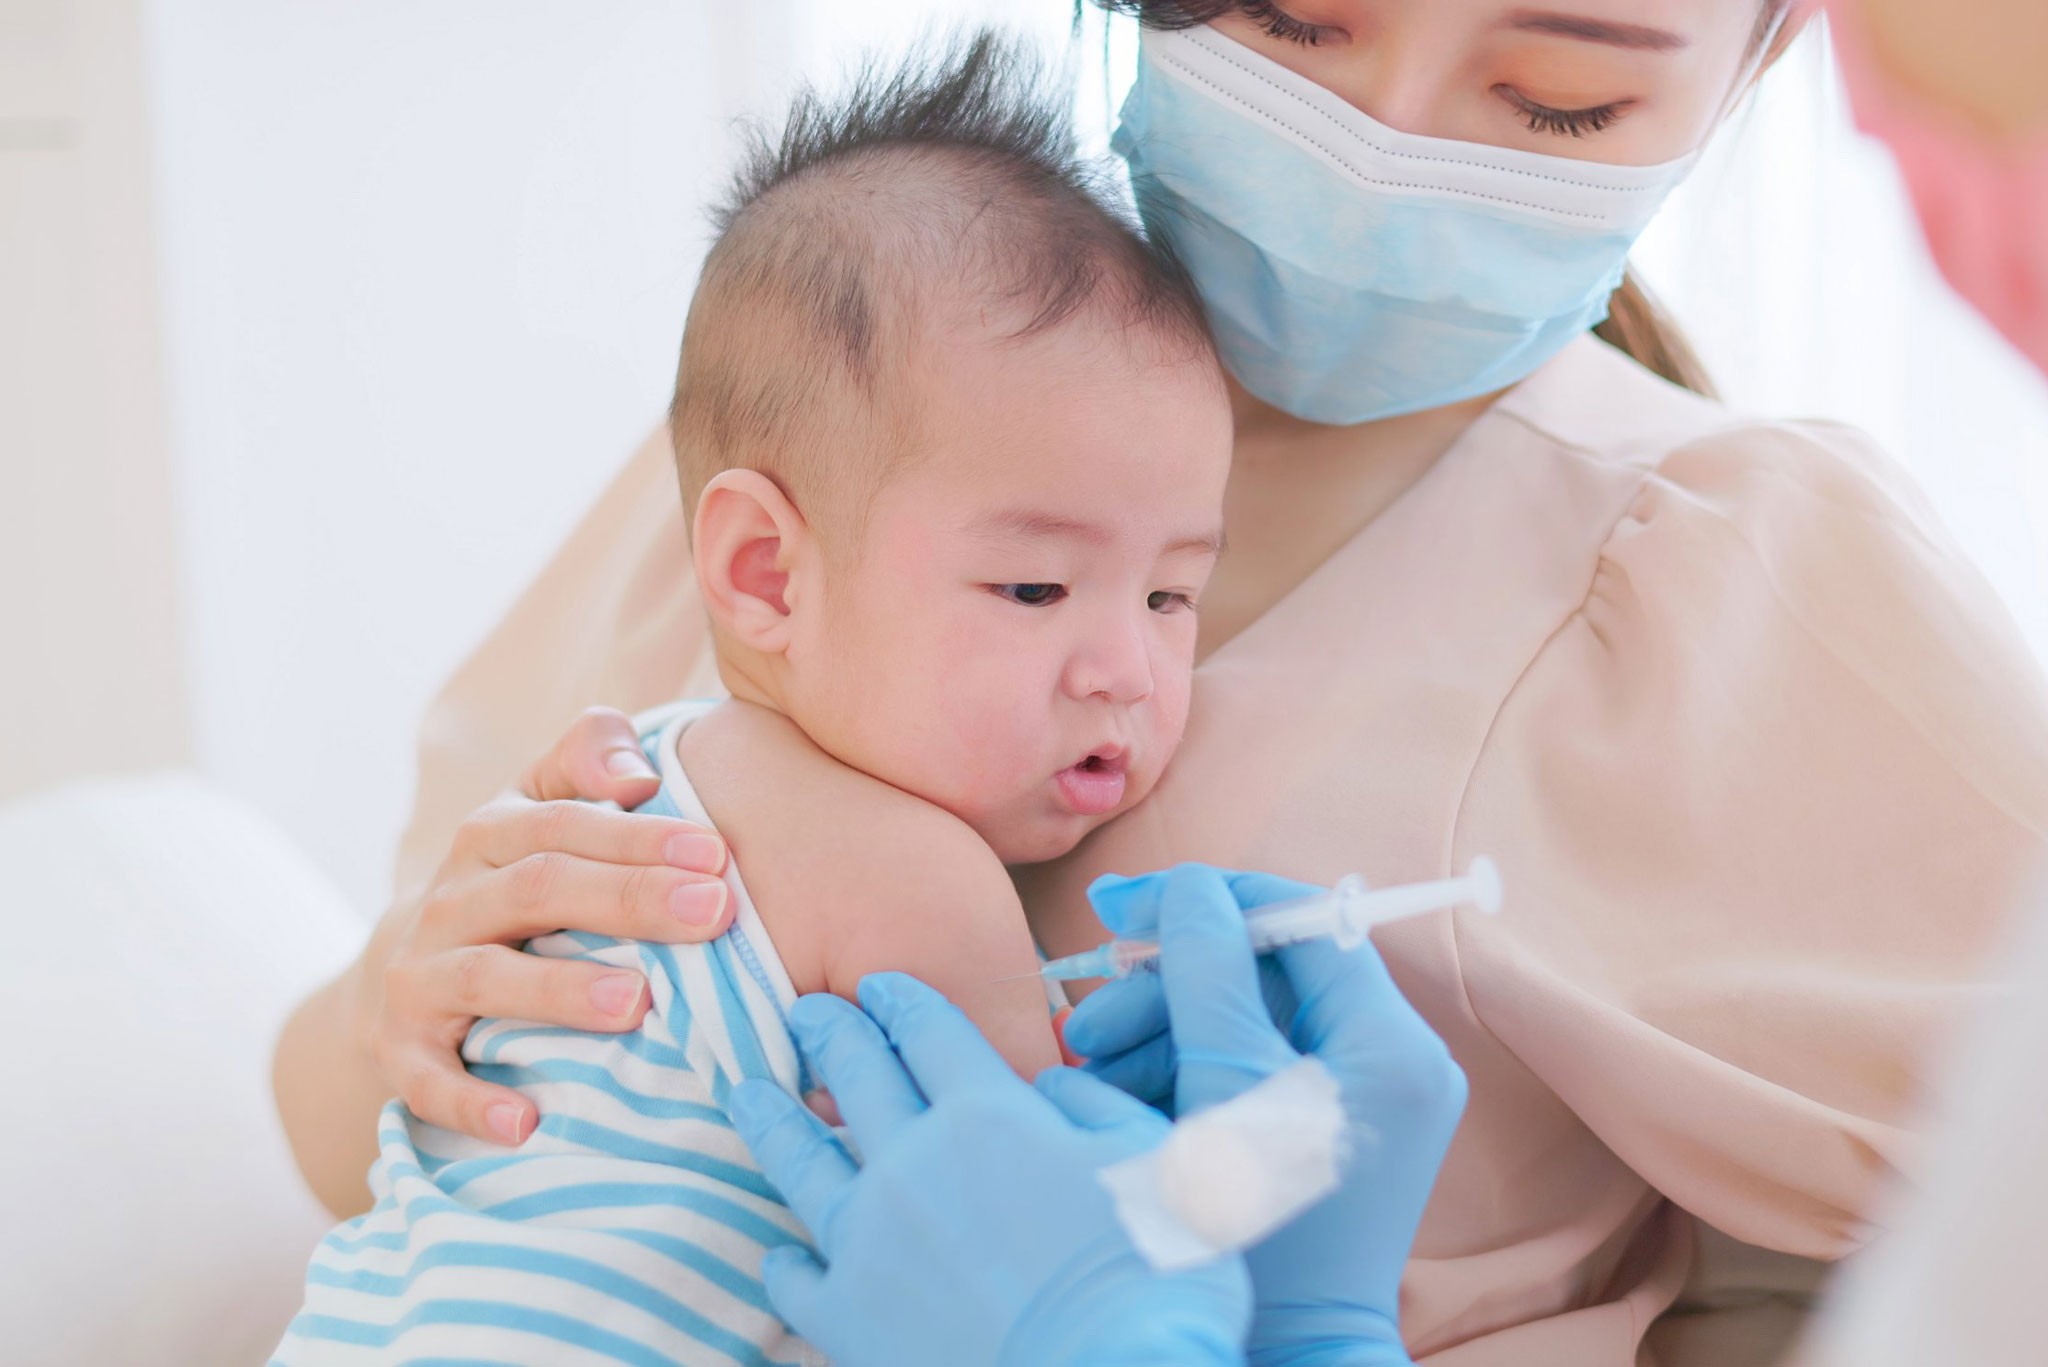 Baby receives vaccine